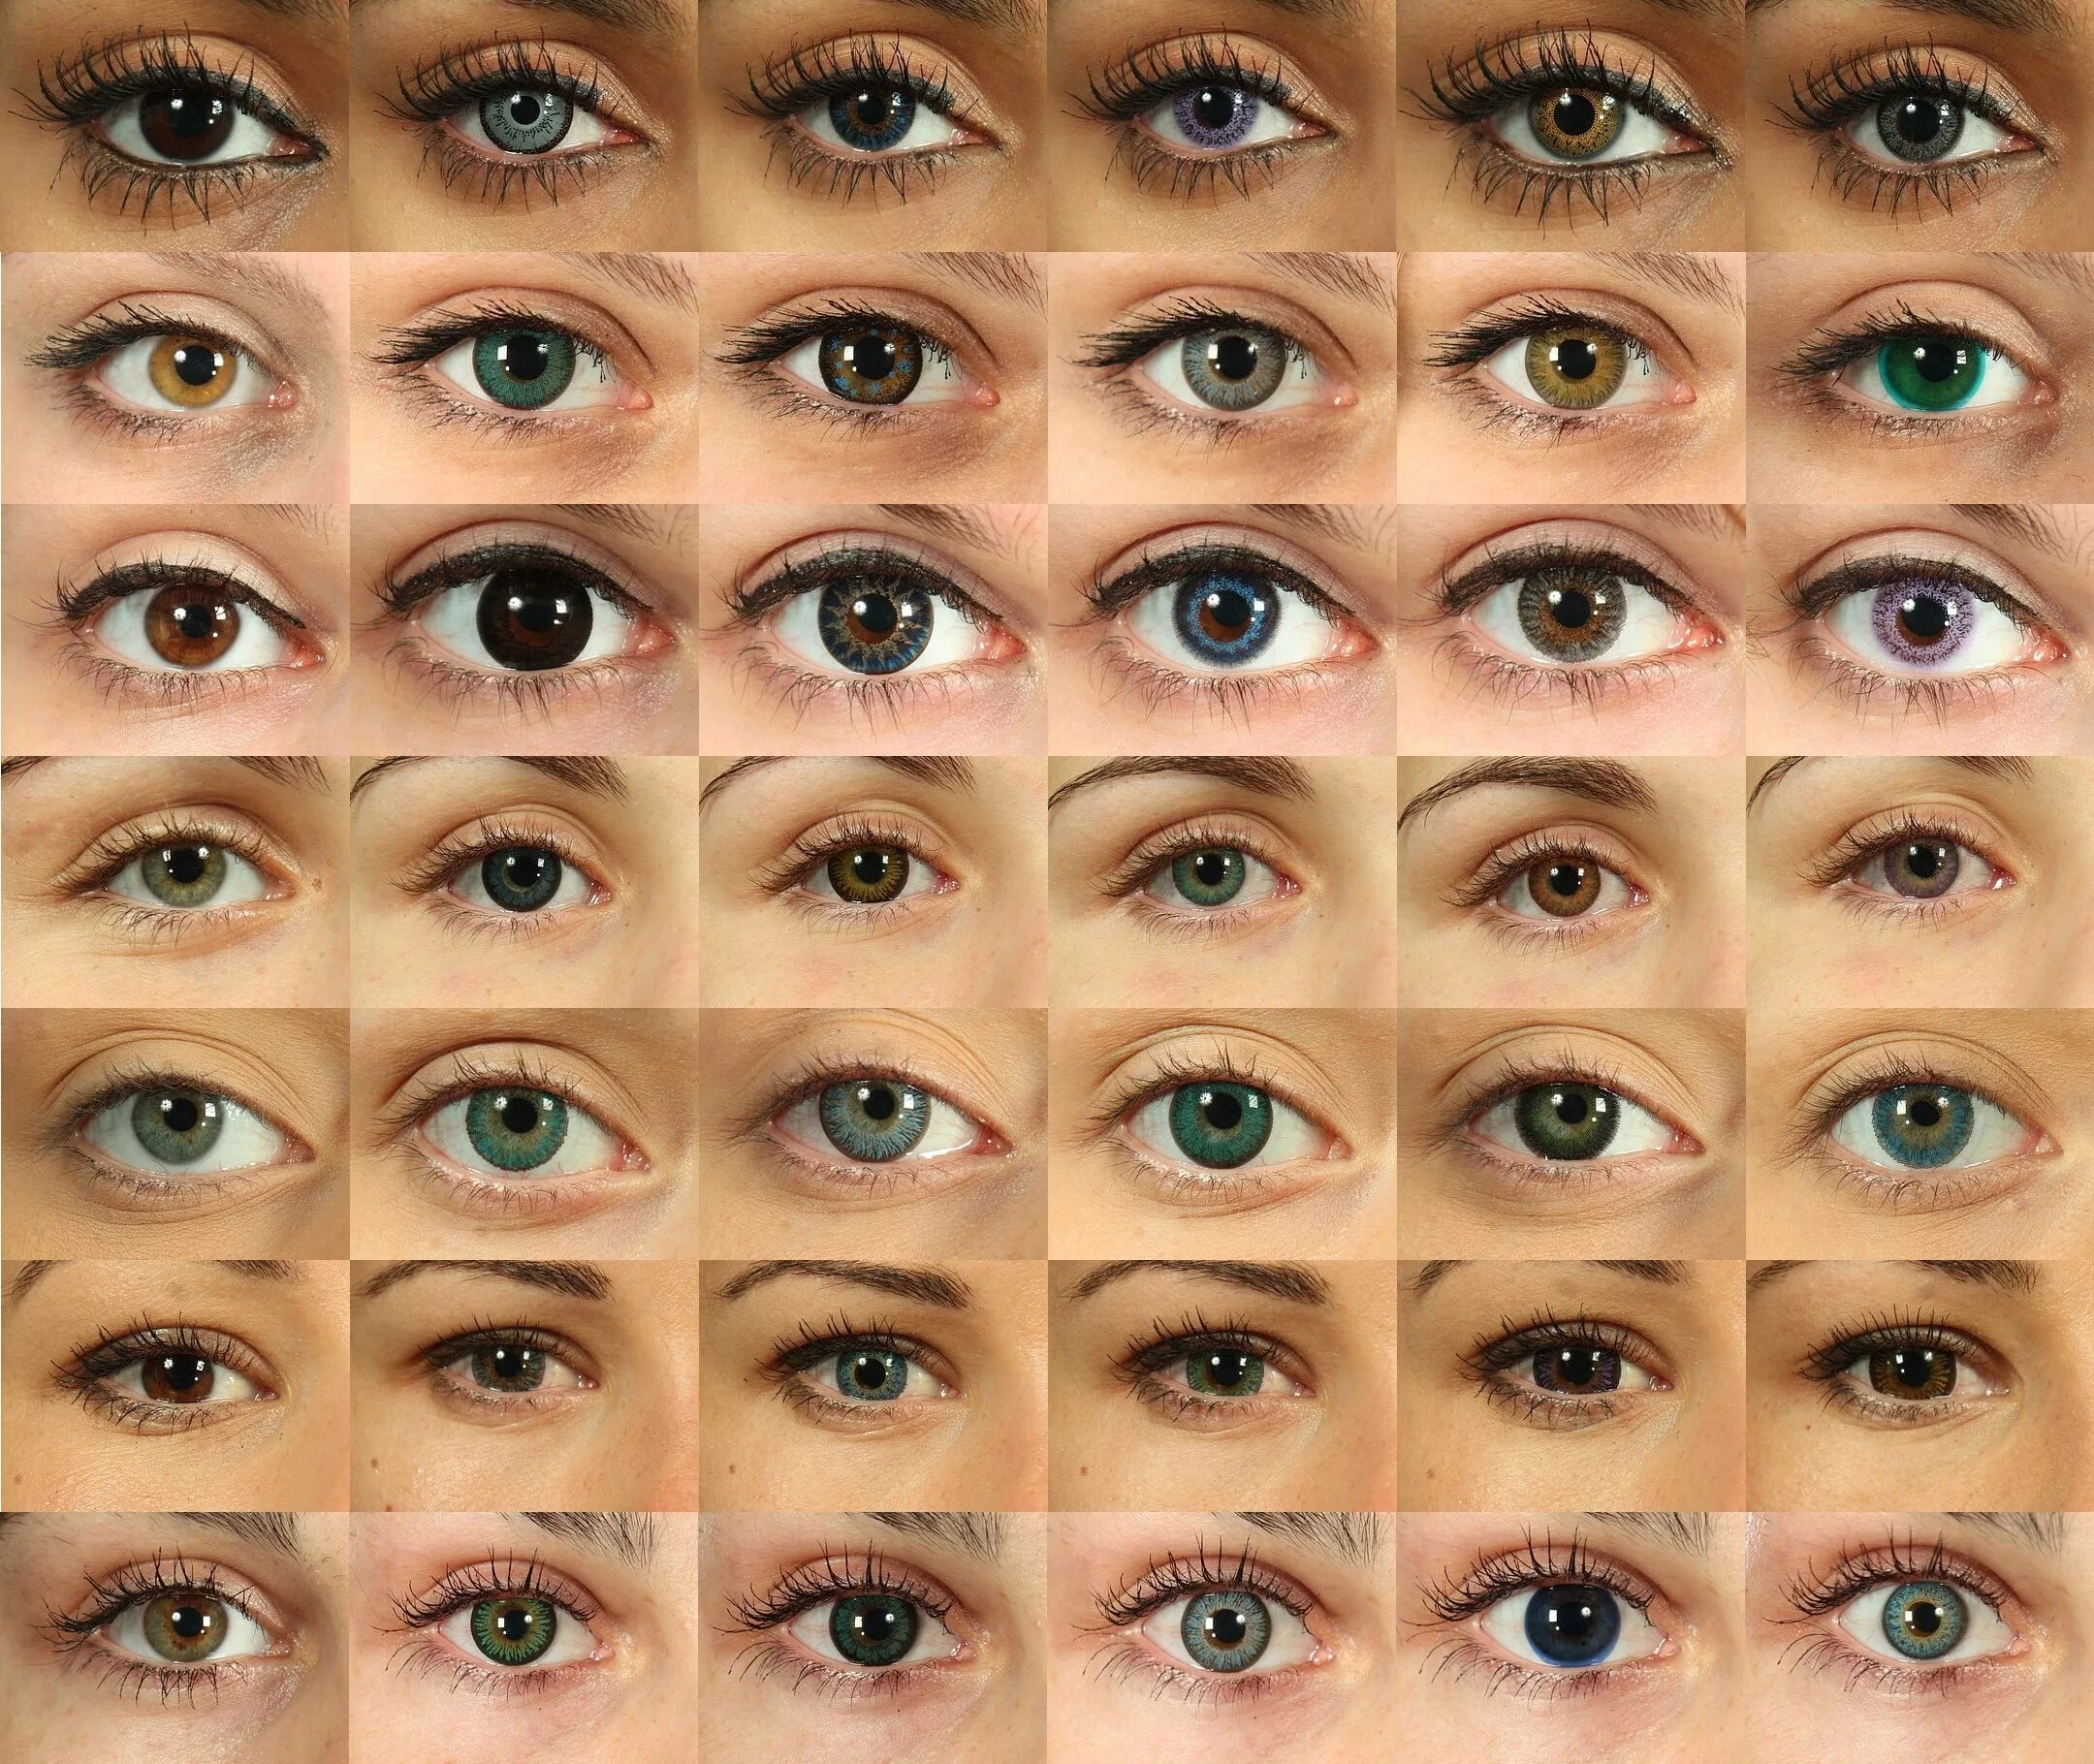 Цвет глаз. Оттенки глаз. Всевозможные оттенки глаз. Расцветка глаз человека. Different eye